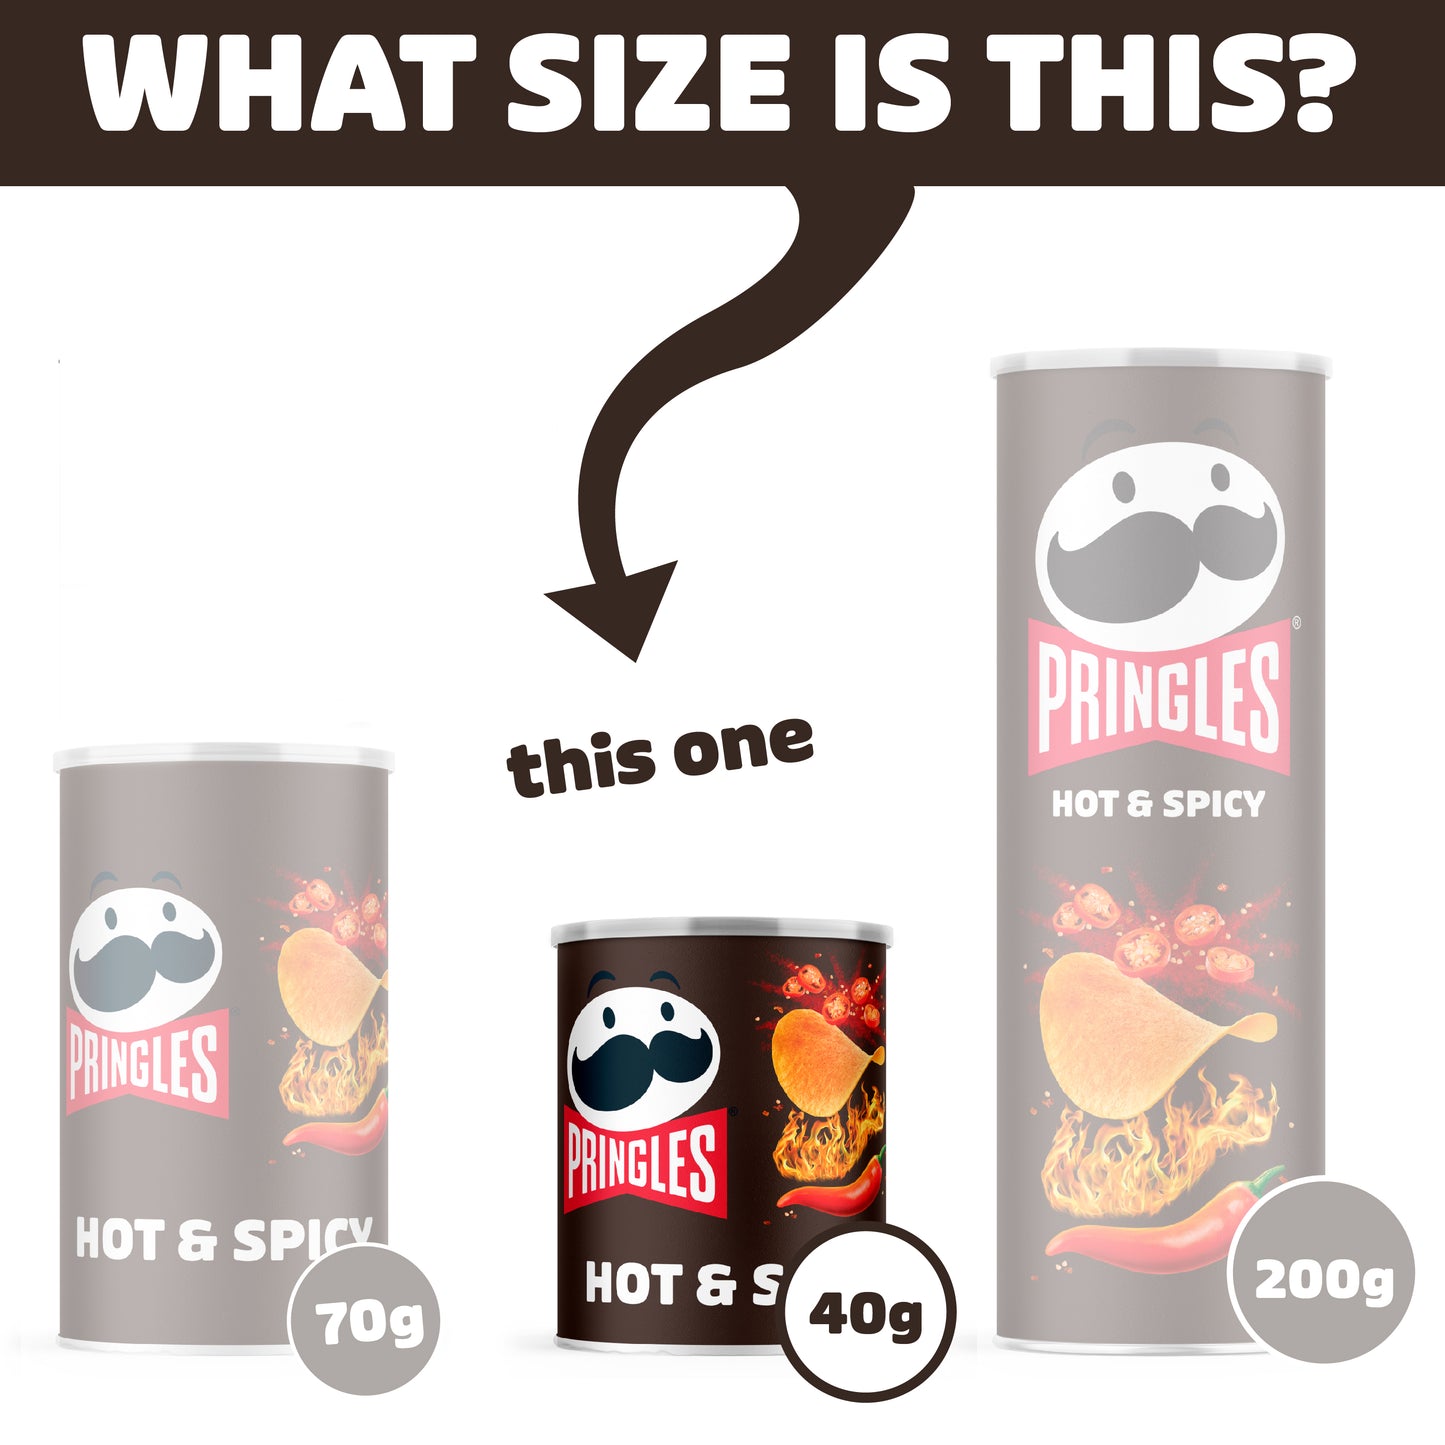 Pringles Hot & Spicy - 40g